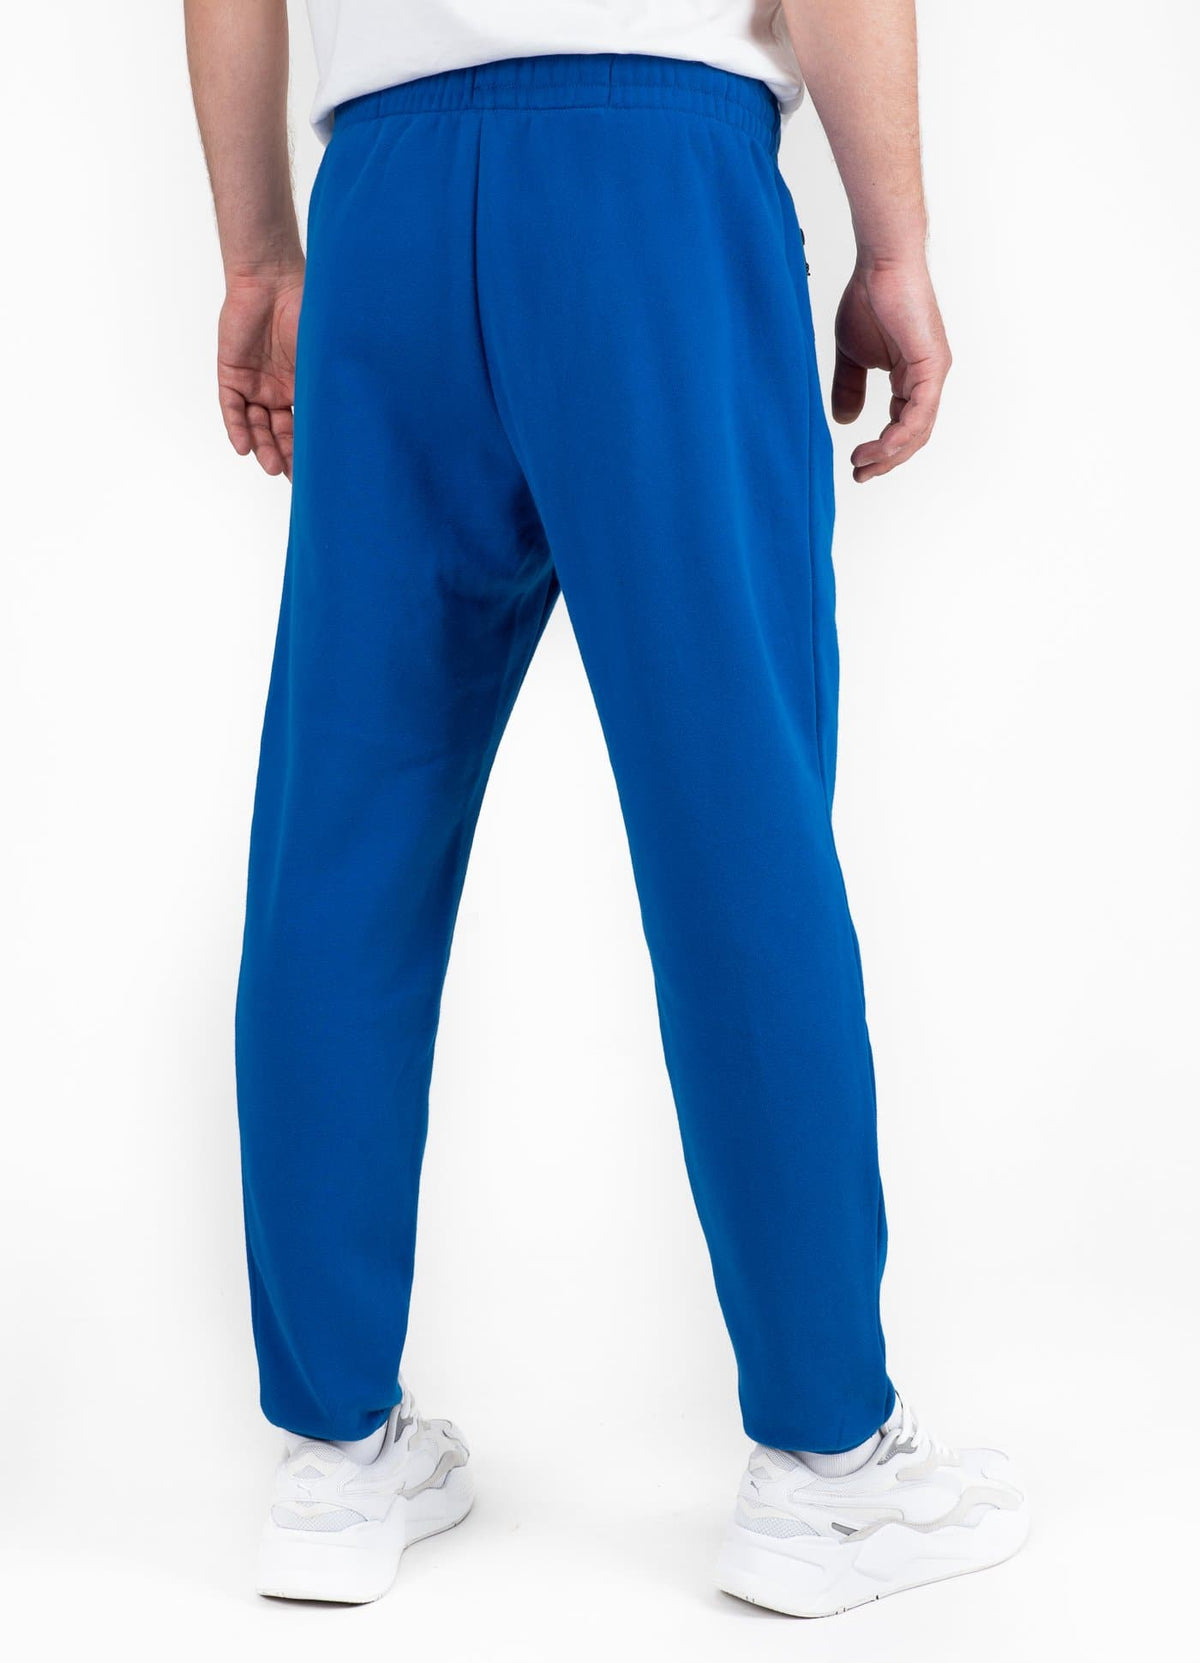 Track Pants ATHLETIC Blue - Pitbull West Coast International Store 